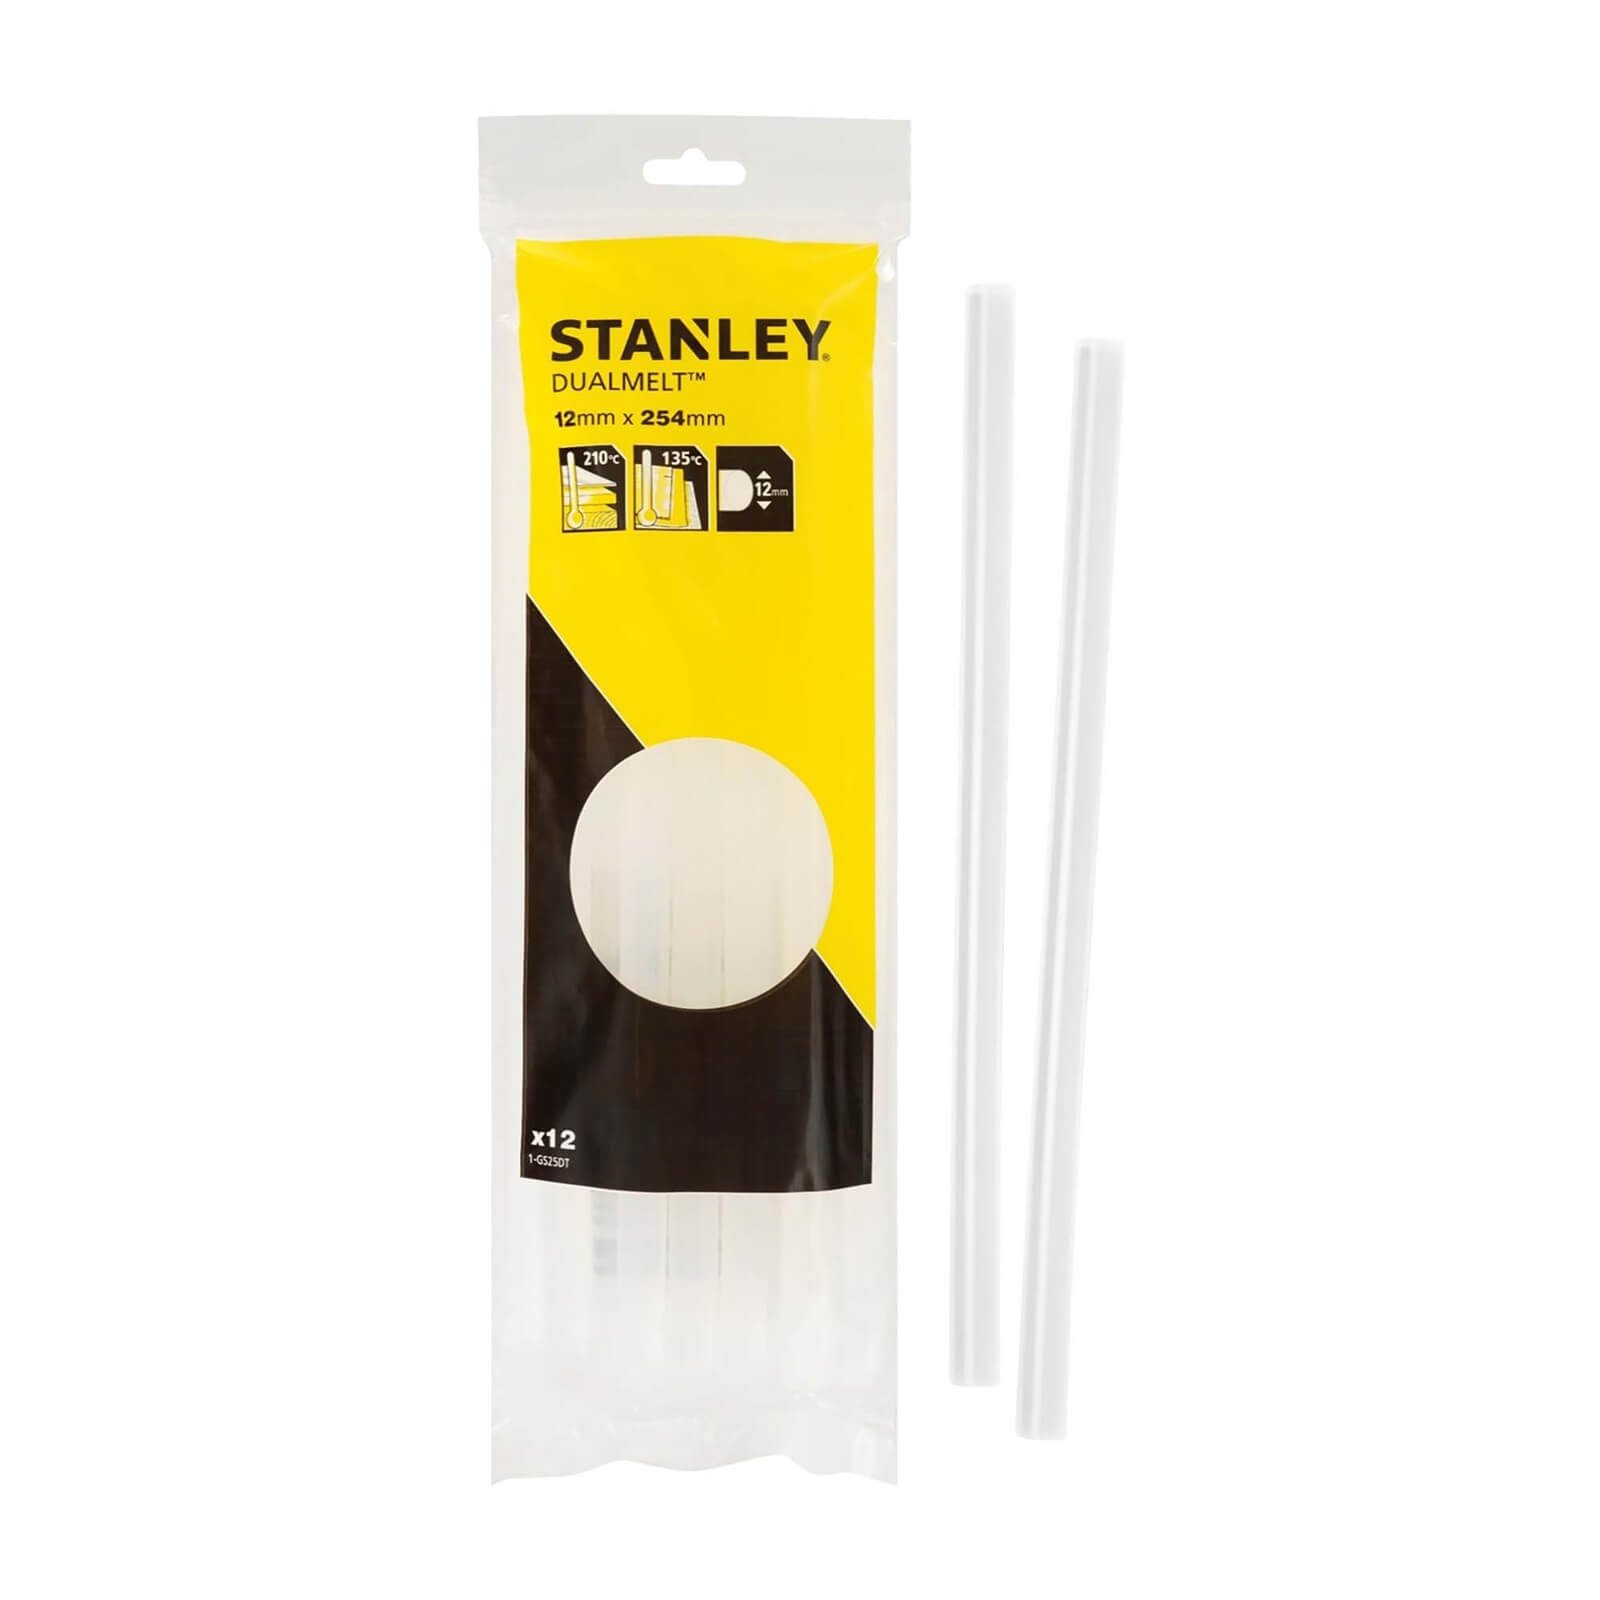 STANLEY DualMelt 12x250mm Glue Sticks – Pack of 12 (1-GS25DT)